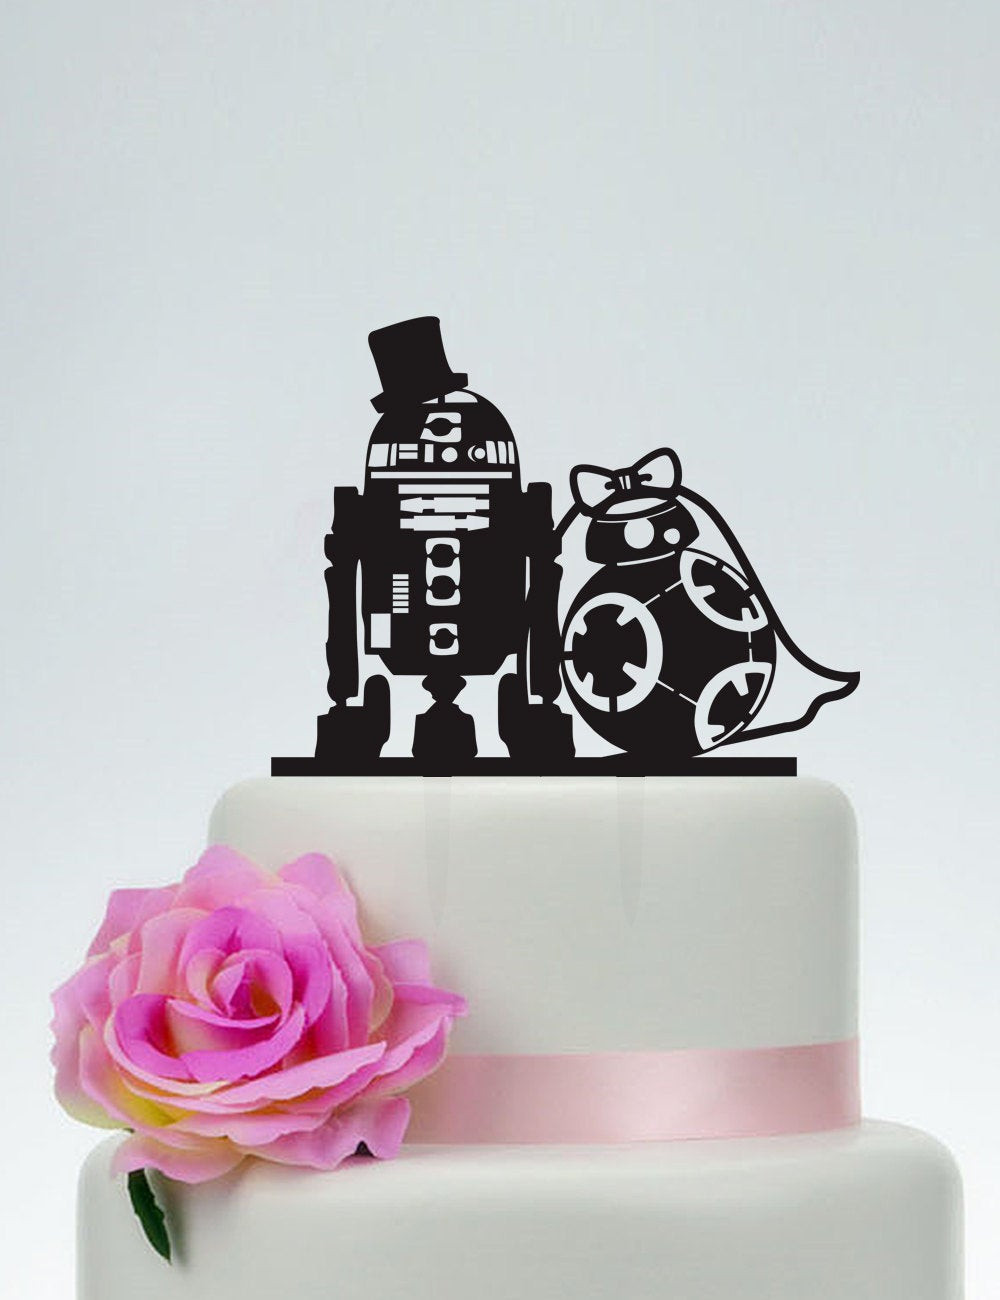 Star Wars Birthday Cake Toppers
 Wedding Cake TopperStar Wars Cake TopperR2D2 & Bb8 cake